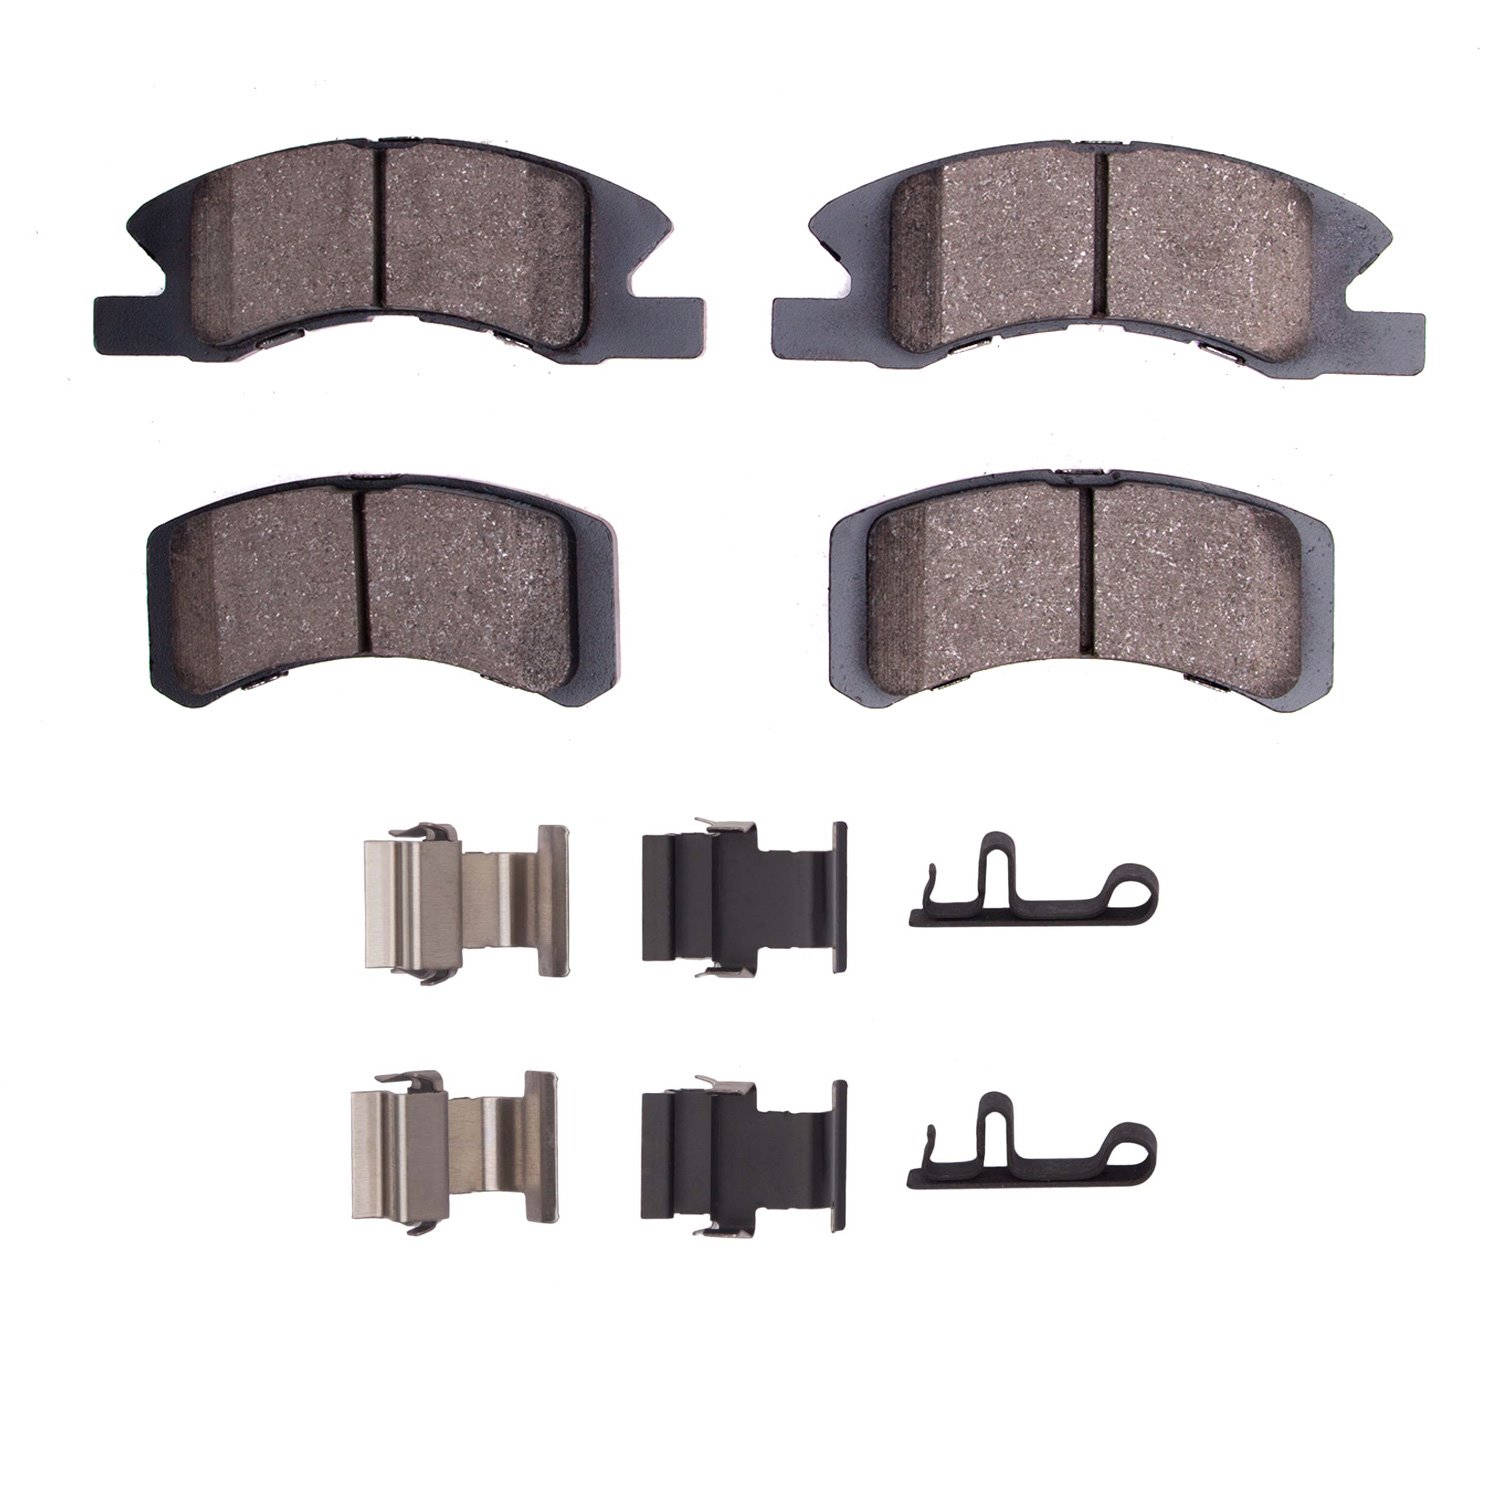 1551-1731-01 5000 Advanced Ceramic Brake Pads & Hardware Kit, Fits Select Multiple Makes/Models, Position: Front